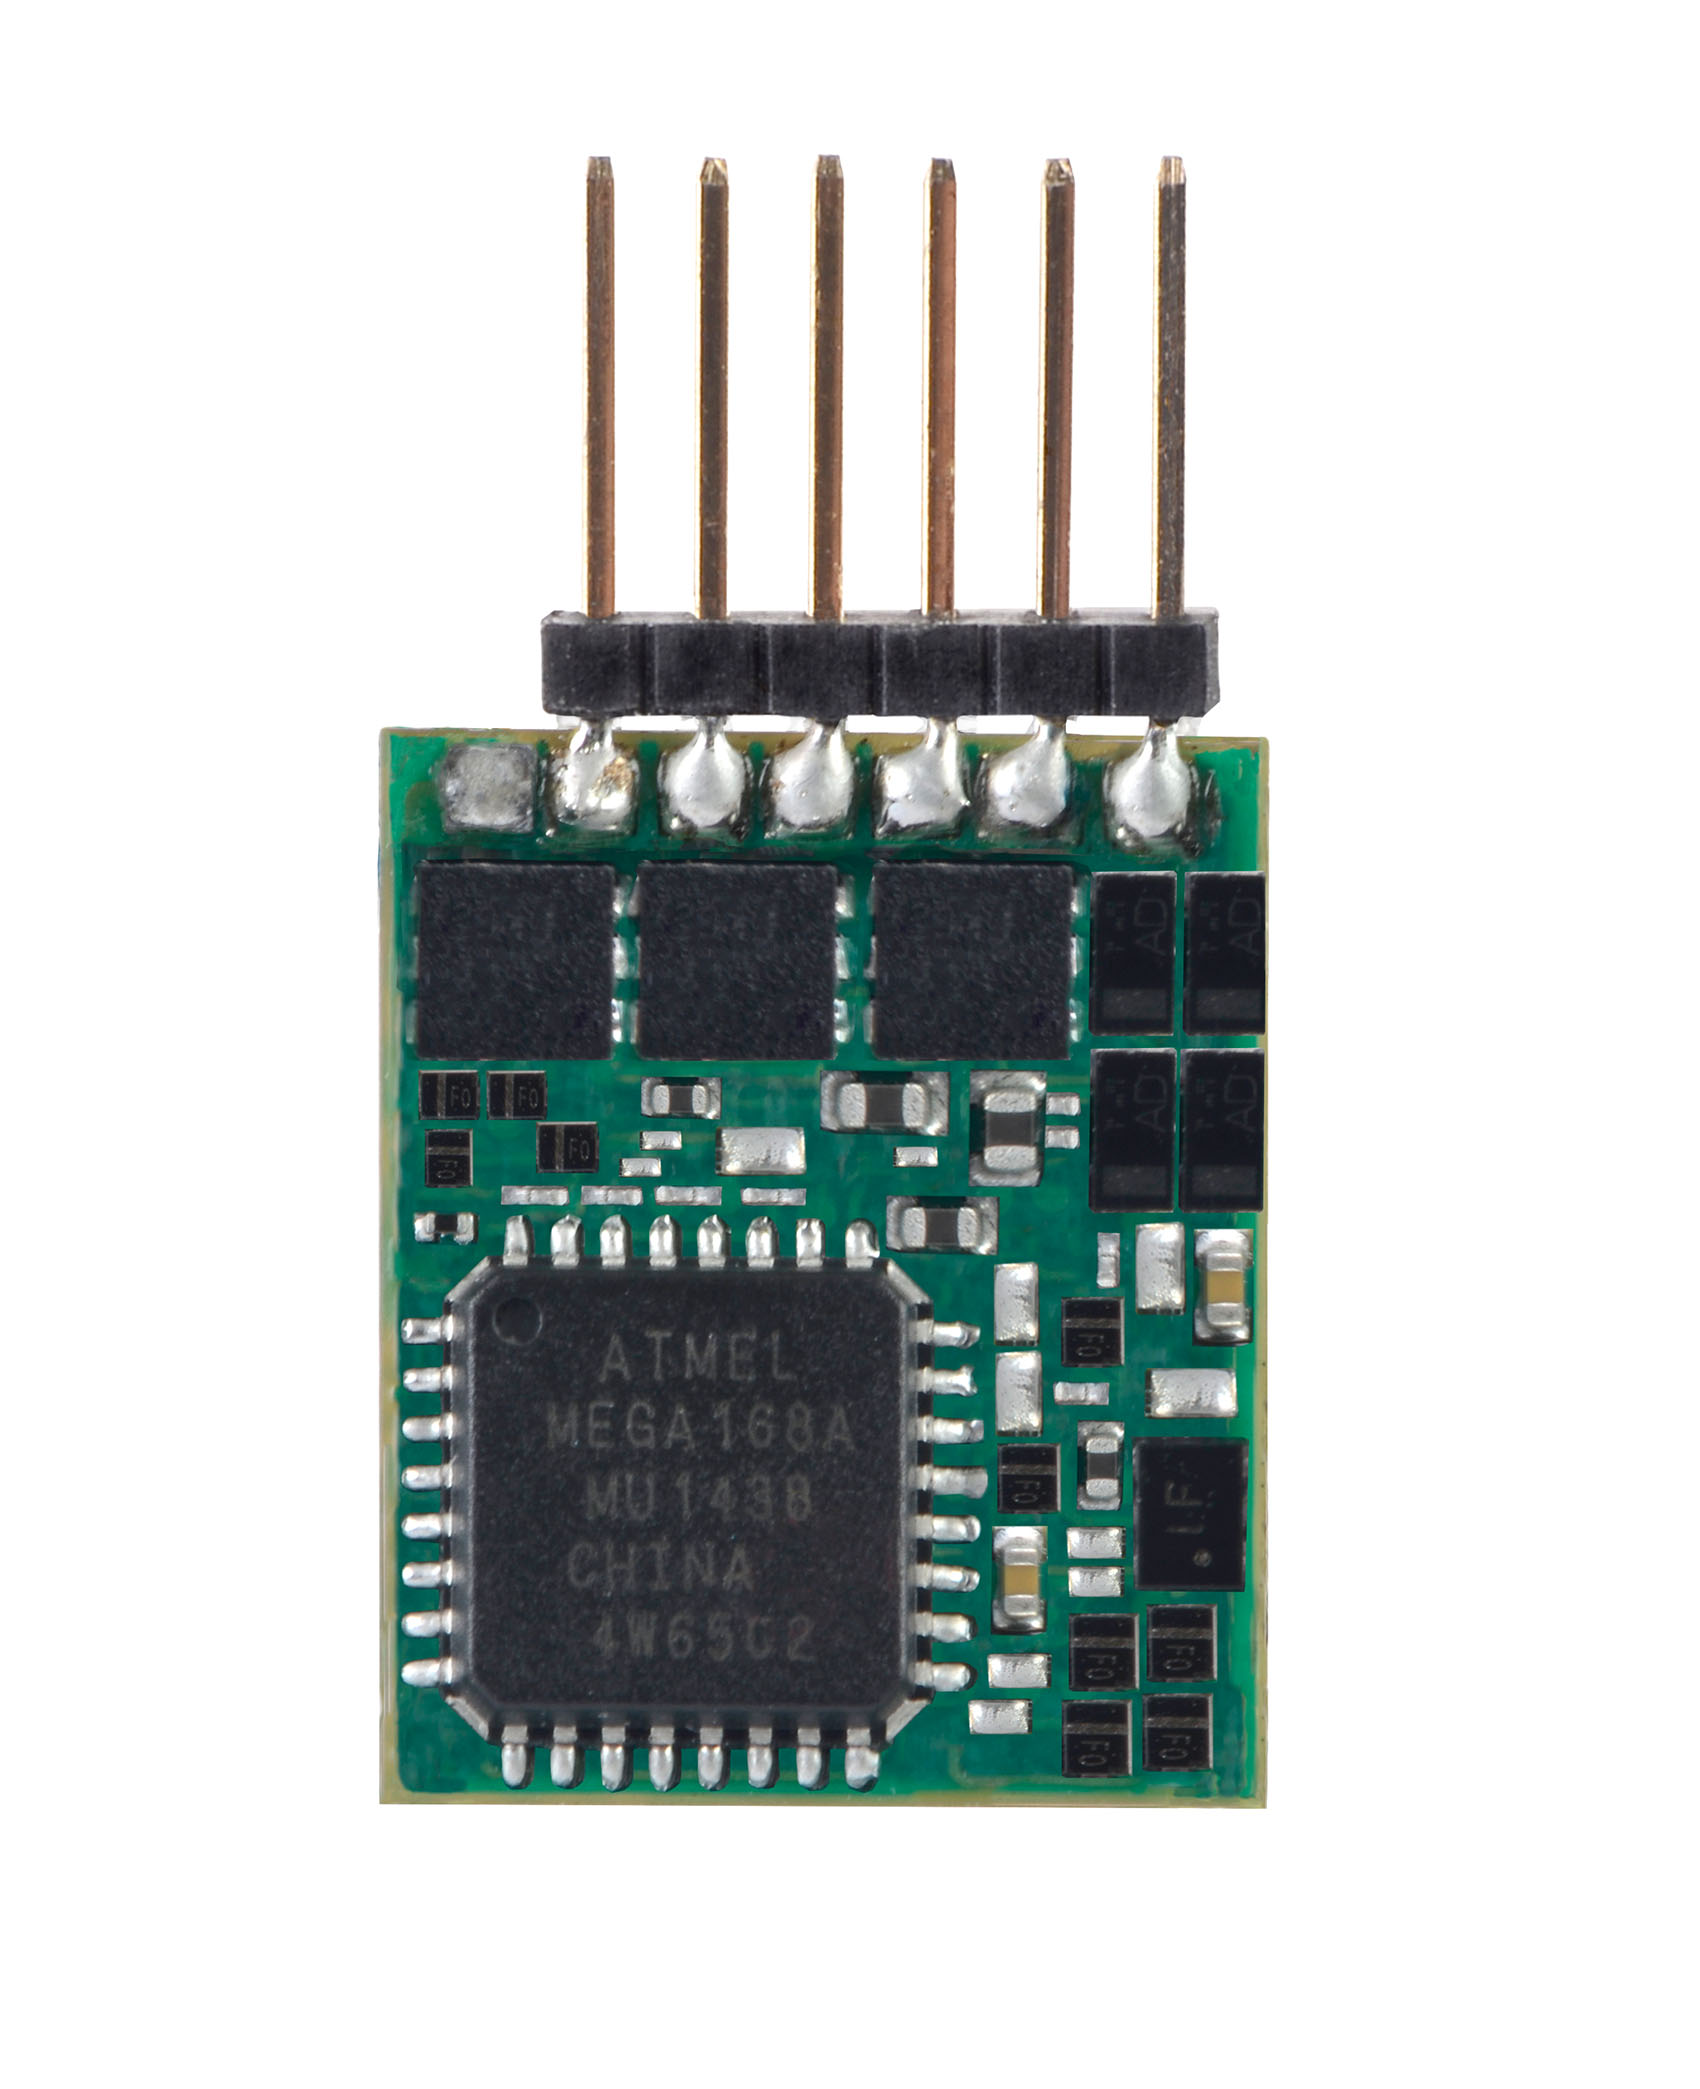 N Lokdecoder mit NEM651 Stiftleiste 6-polig DCC/MM RailCom 1,56 x B 0,95 x H 0,21 cm (inkl. Stecker).